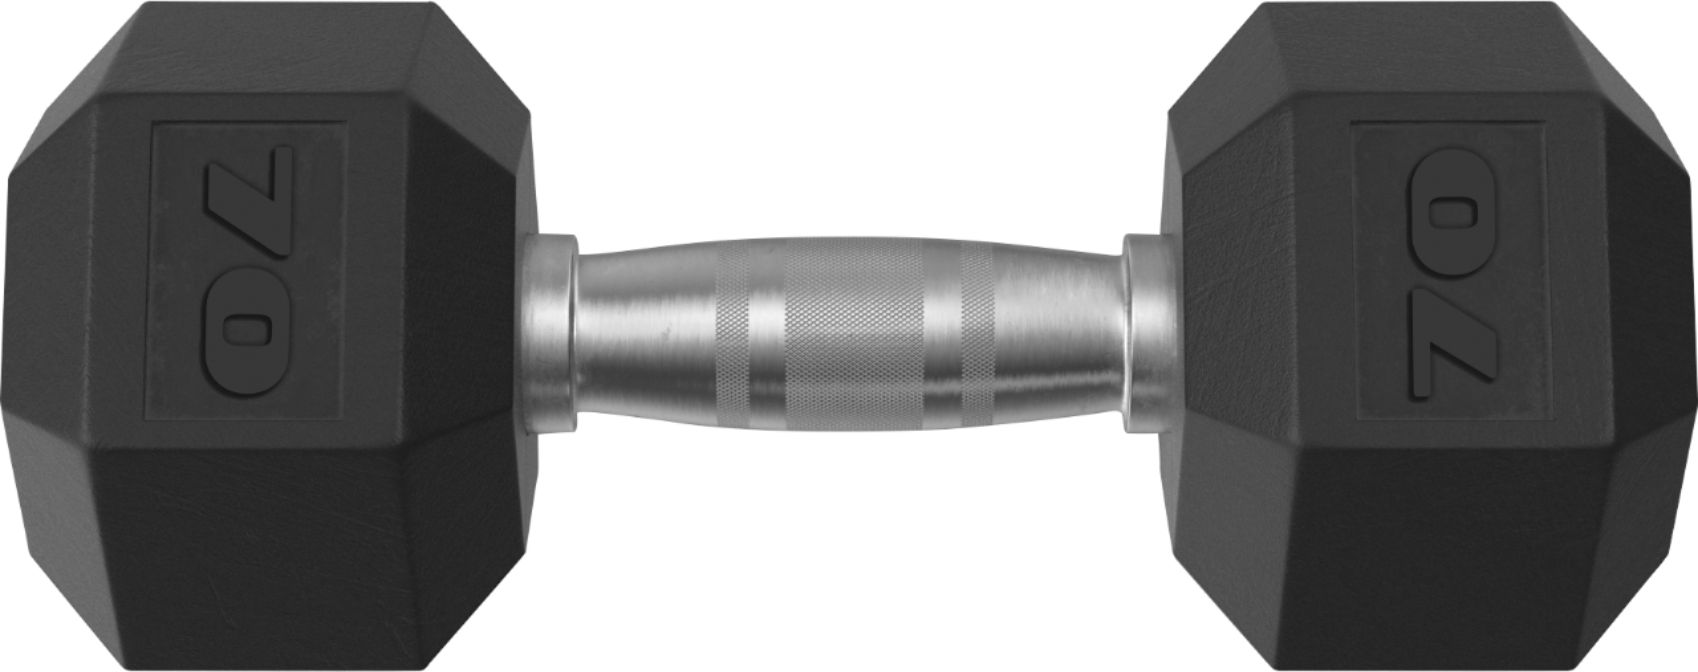 Tru Grit - 70-lb Hex Rubber Coated Dumbbell Single - Black/Silver